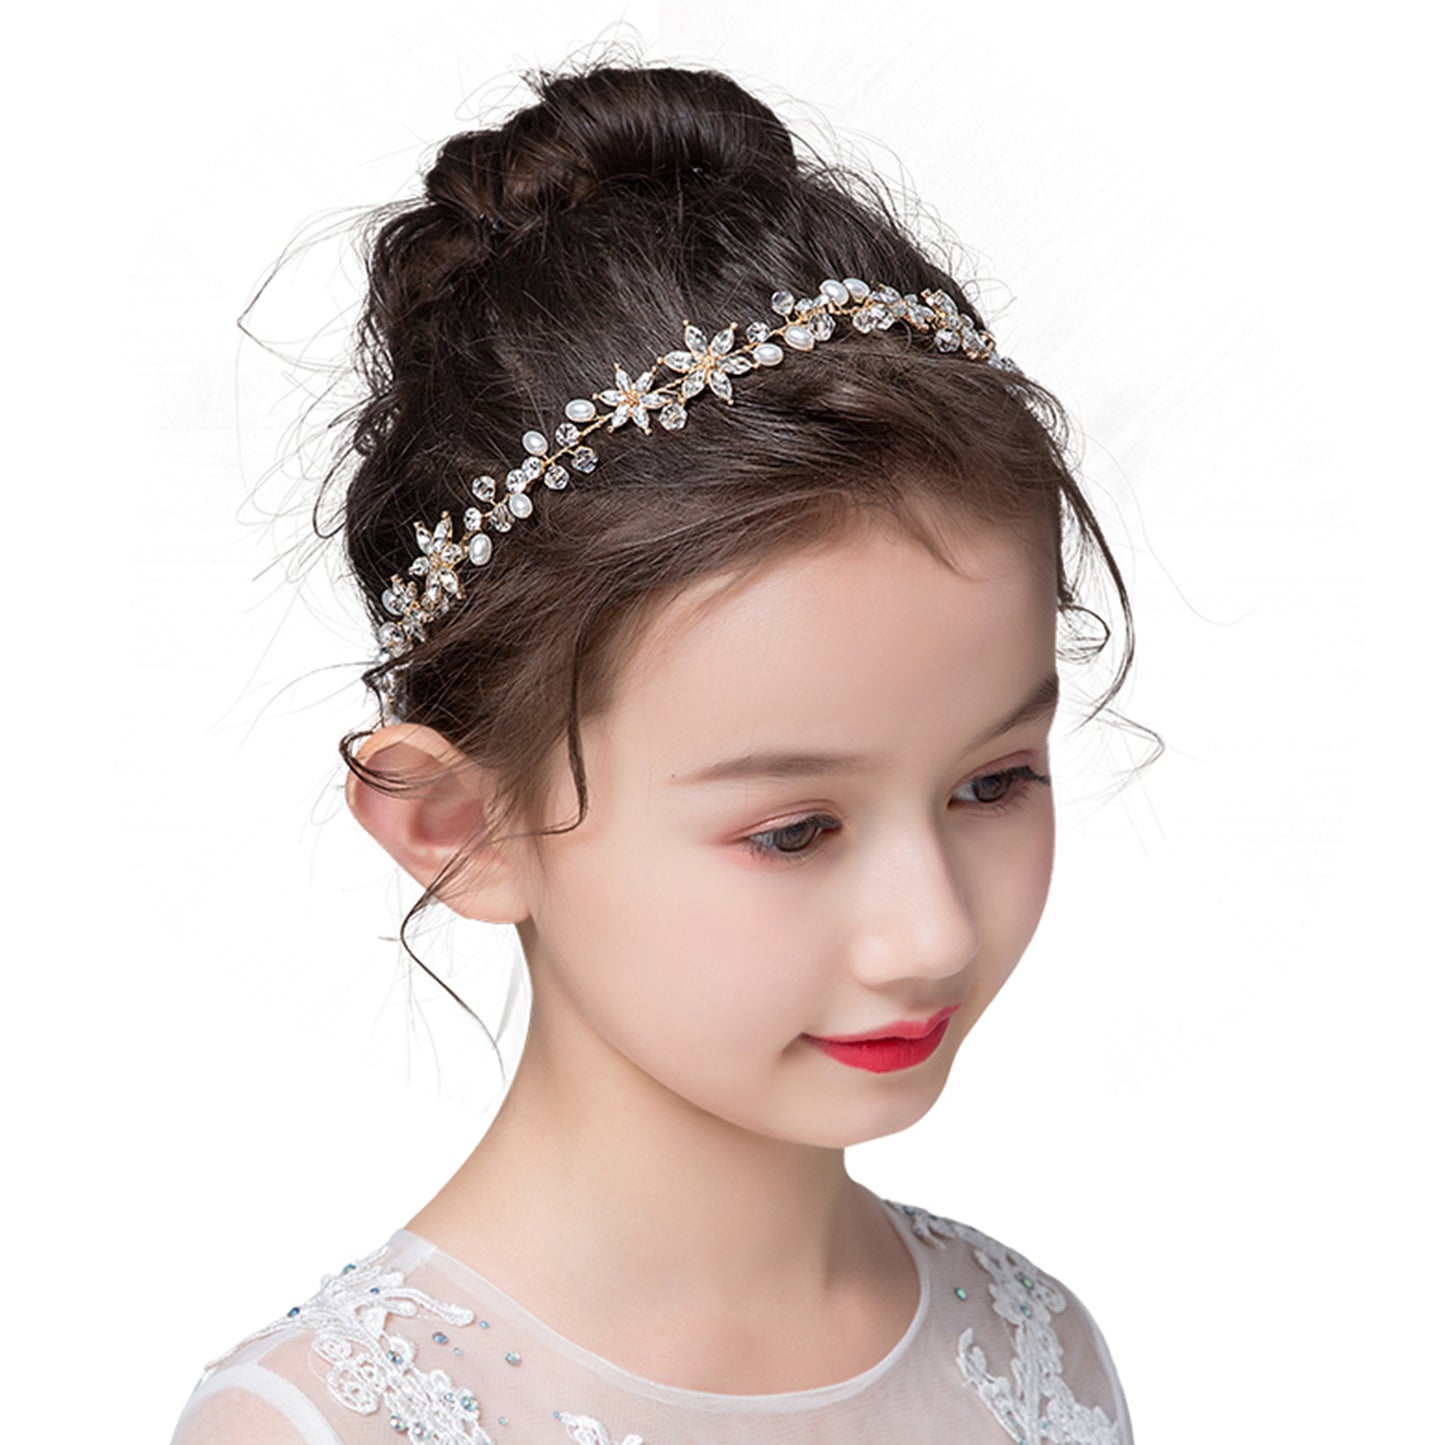 Girls Princess Hair Accessories Party Wedding Headpiece/Headbands Elegant